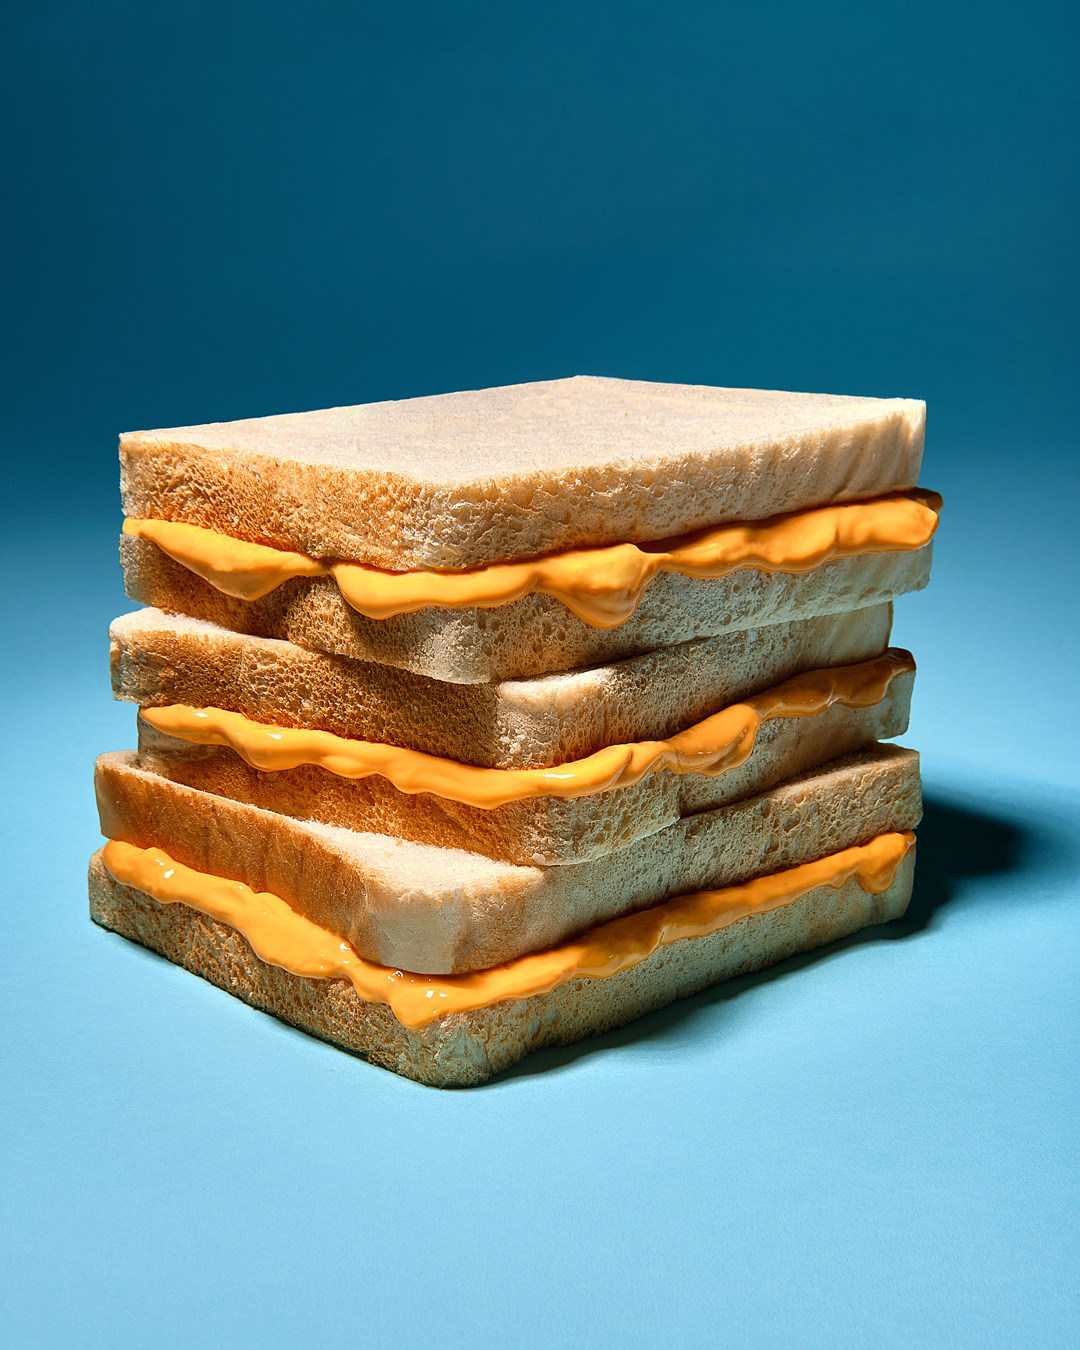 three cheez whiz filled sandwiches in a stack